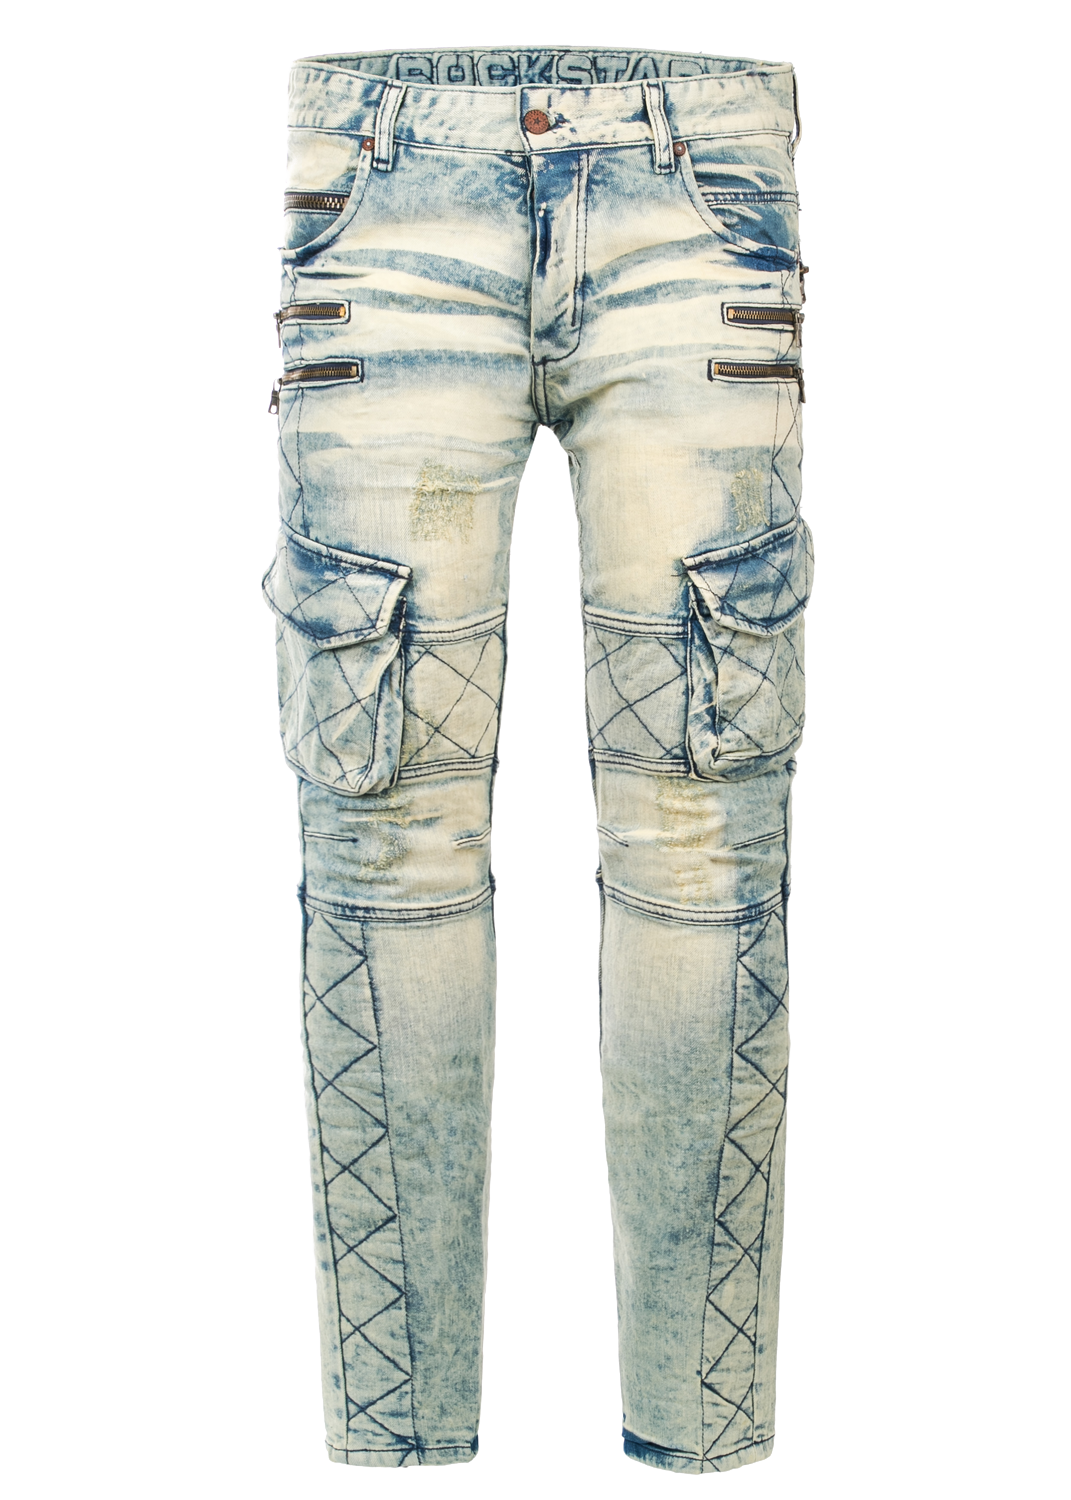 Biker Jeans PNG Image With Transparent Background